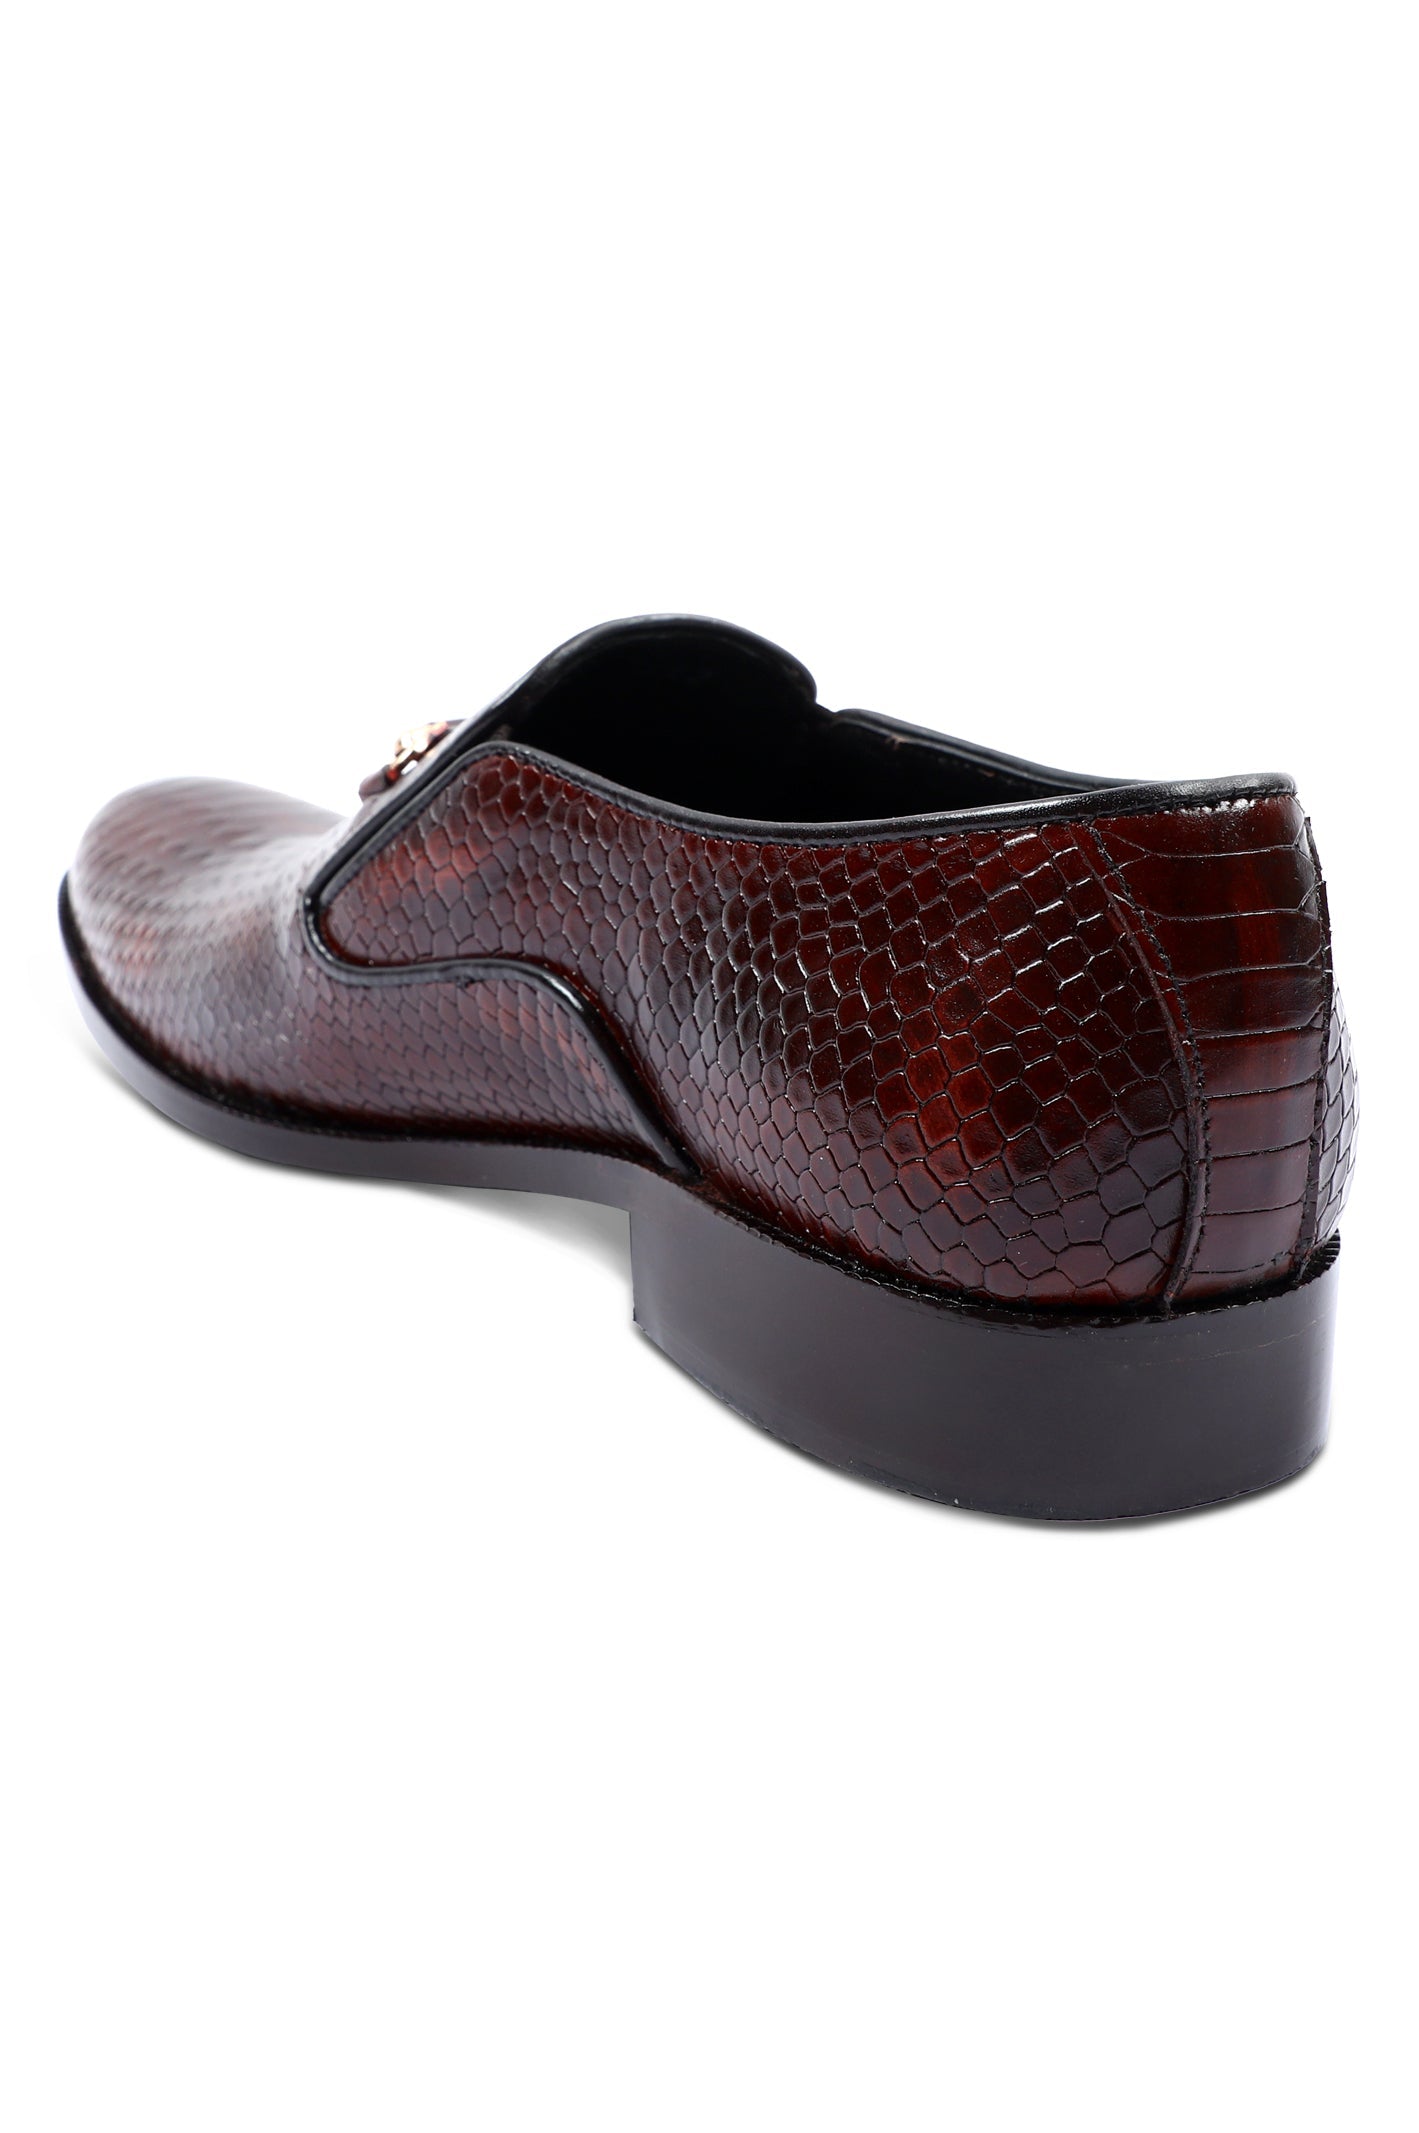 Formal Shoes For Men in Maroon SKU: SMF-0194-MAROON - Diners